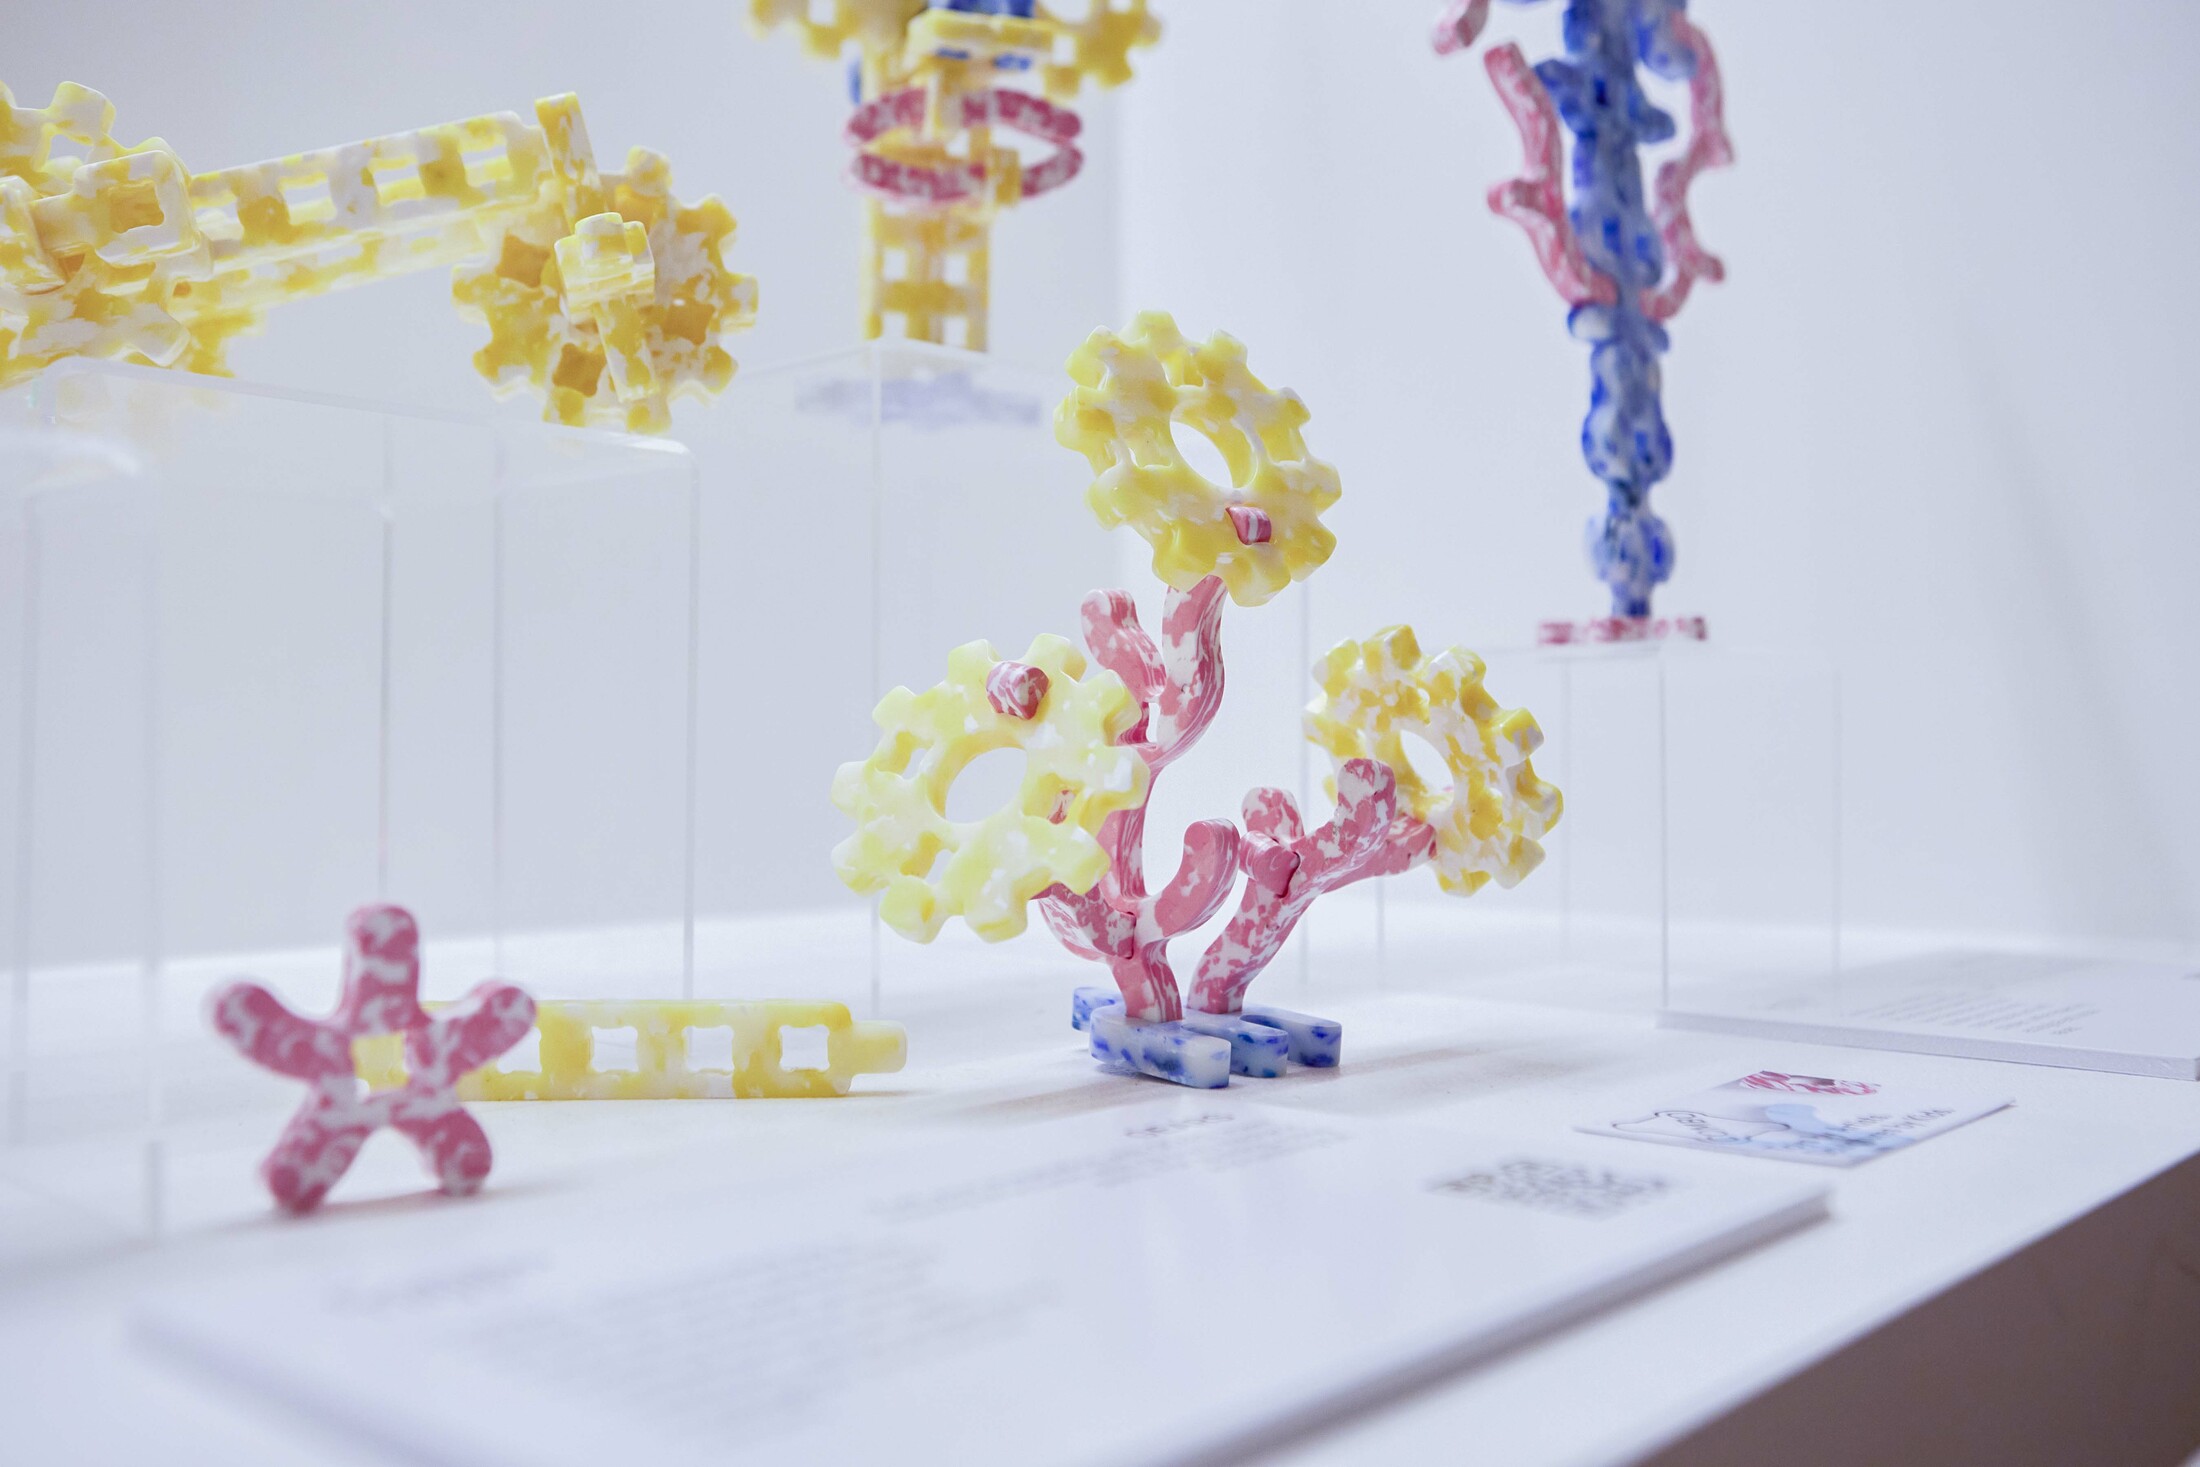 Combo Toys, kinderspeelgoed gemaakt in Brussel van 100% gerecycled plastic, afkomstig van lokale industrieën. Combo Toys volgde in 2023 het MAD Fly begeleidingsprogramma.